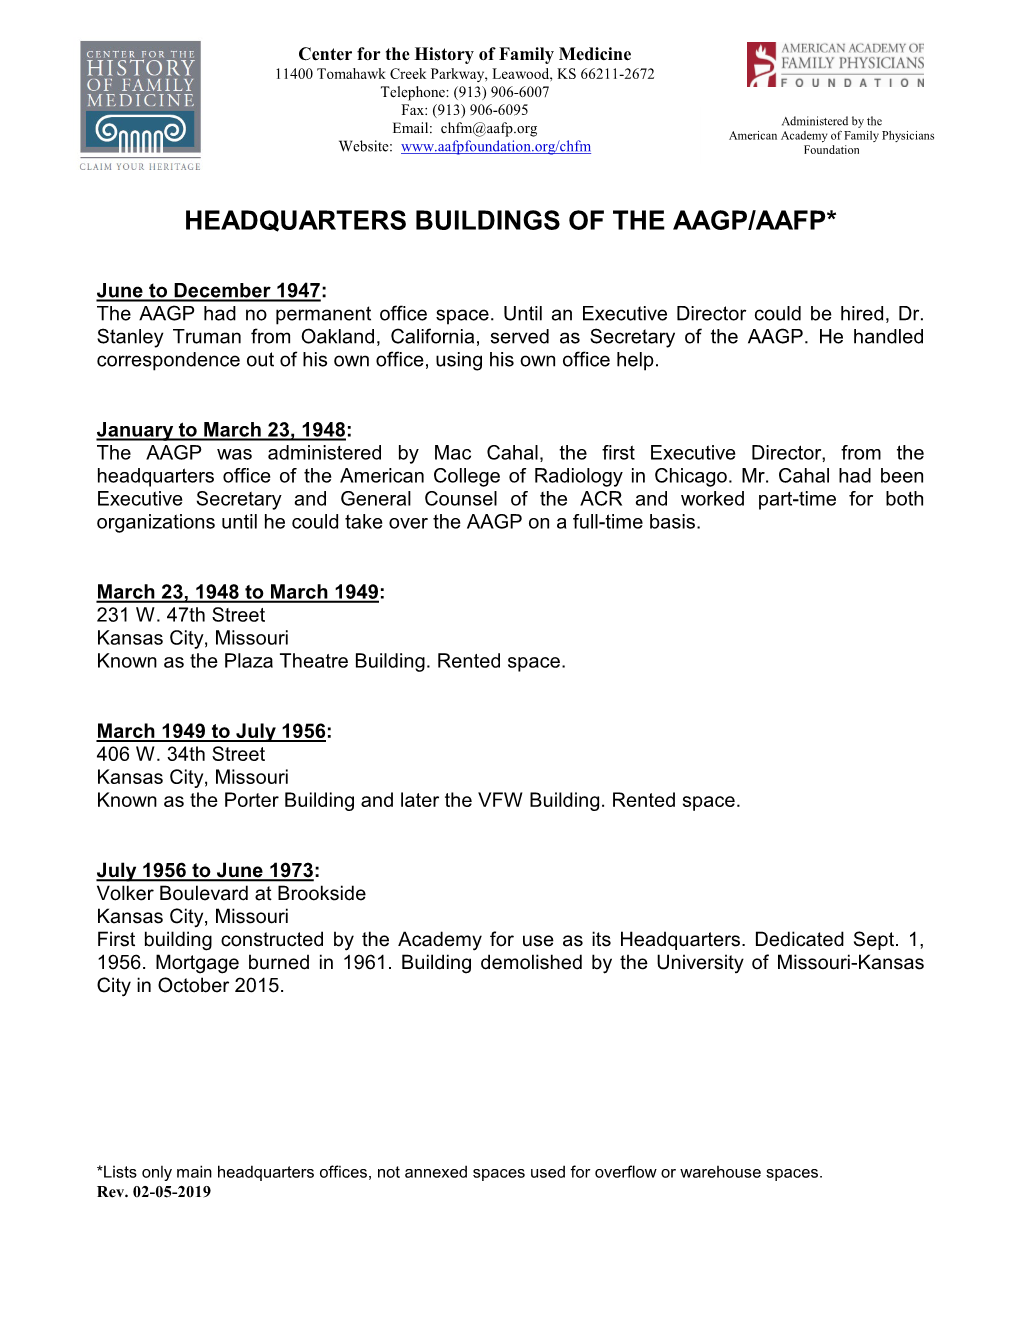 Headquarters Buildings of the Aagp/Aafp*